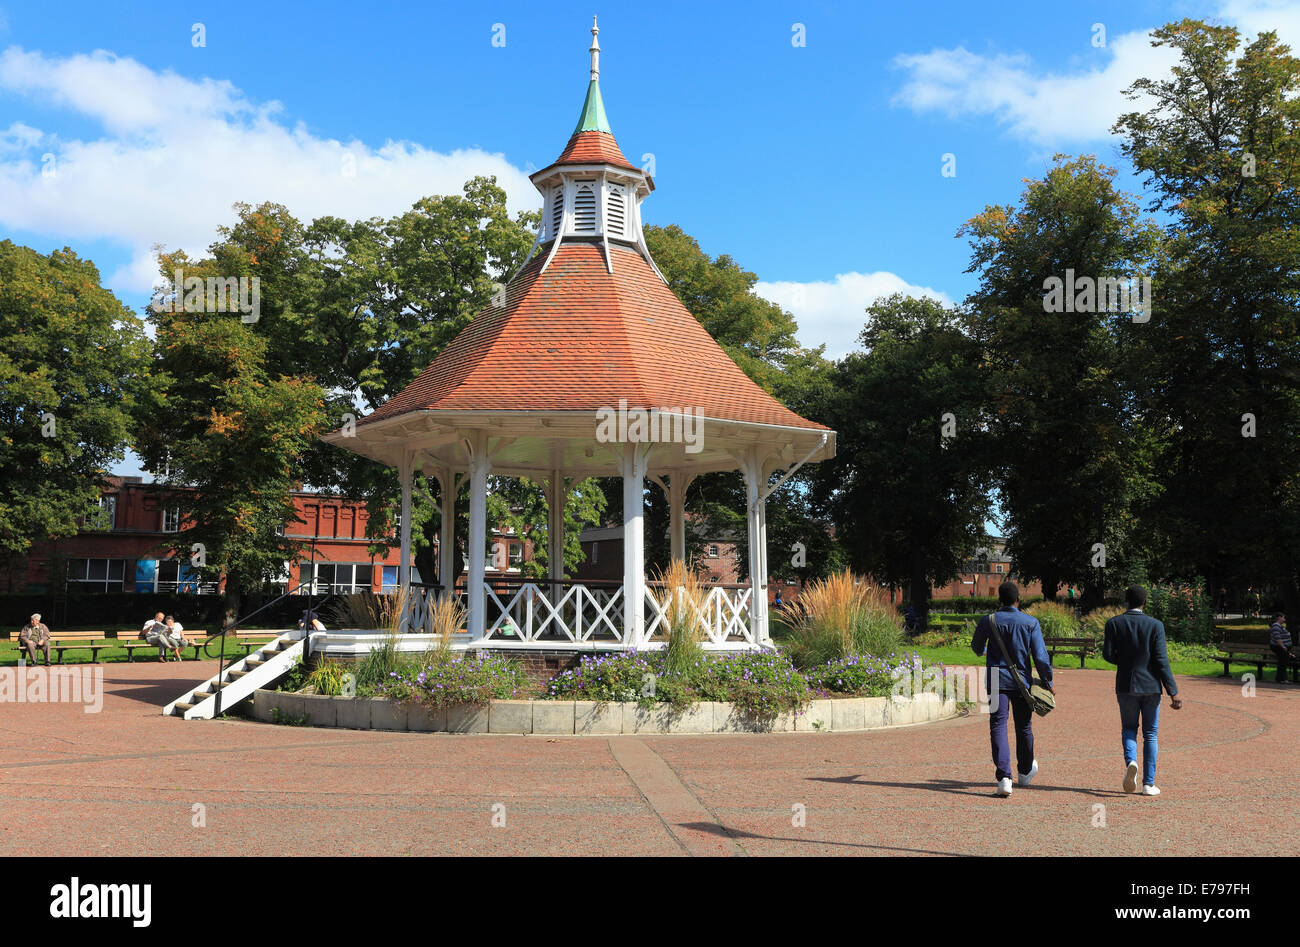 The bandstand in Chapelfield Gardens, Norwich, Norfolk, England. Stock Photo